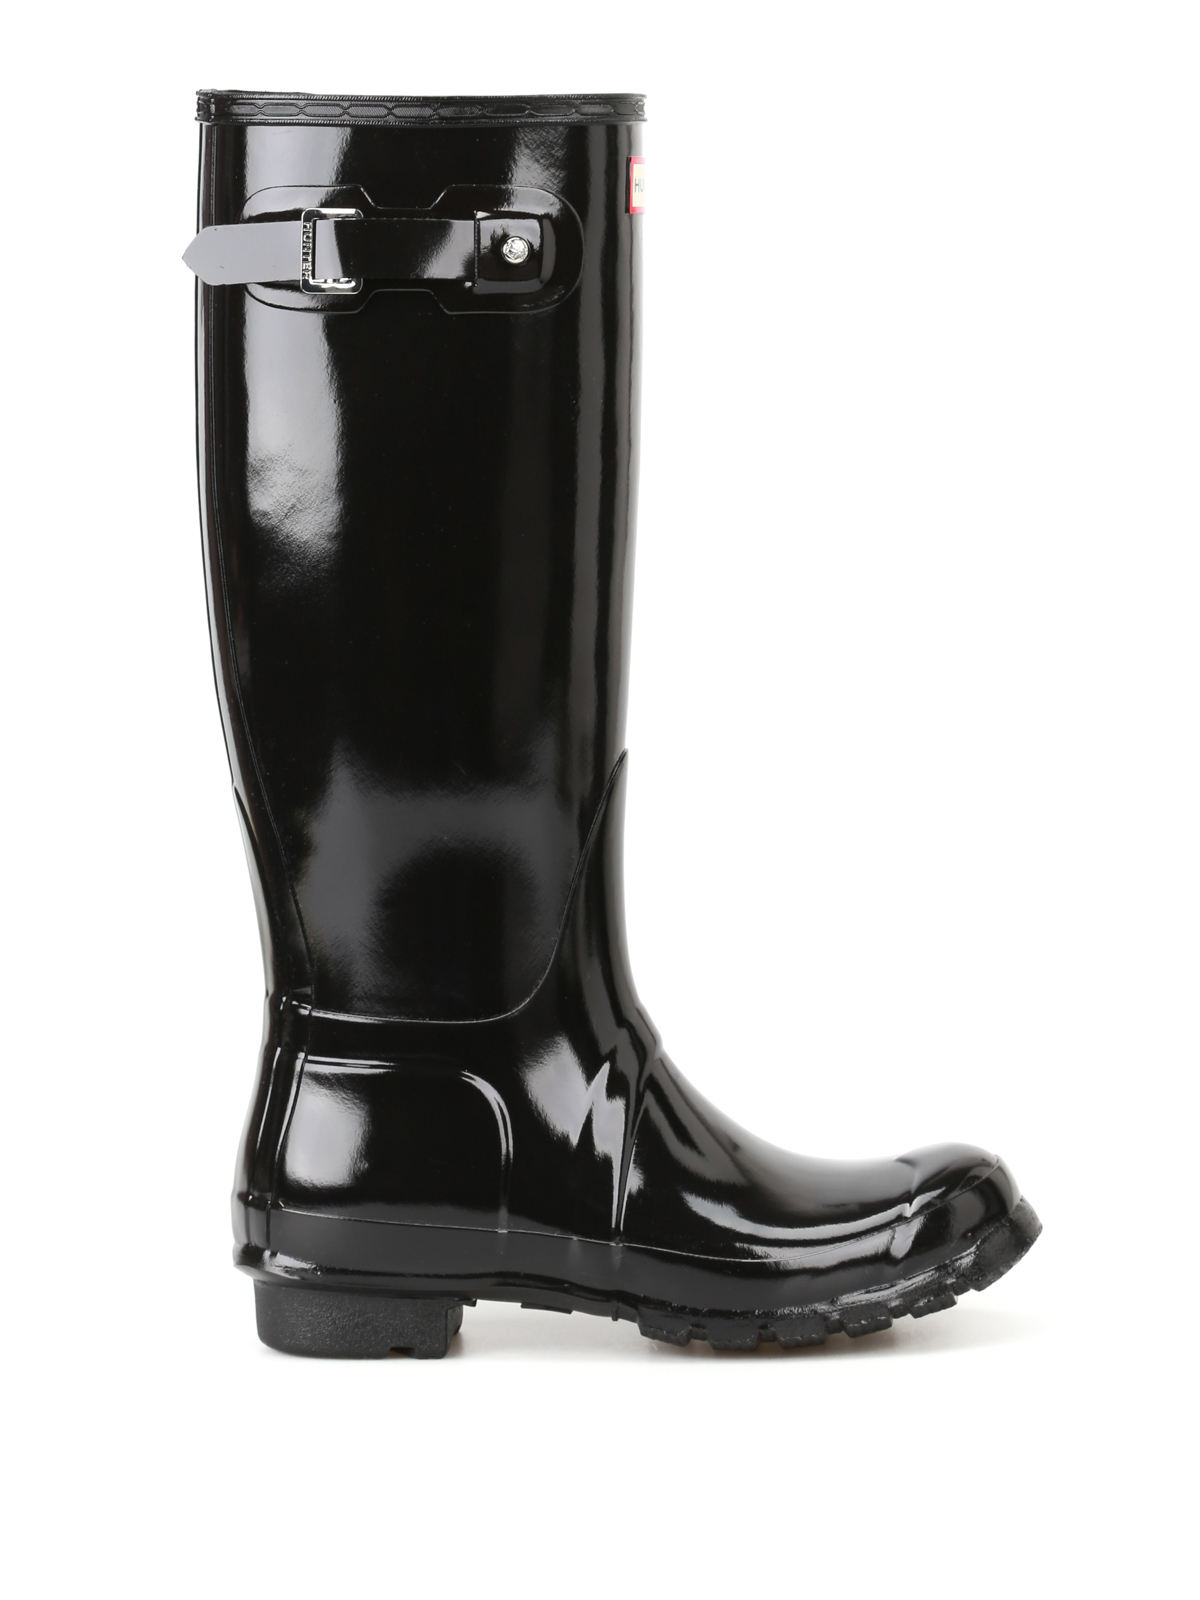 hunter tall gloss black rain boots